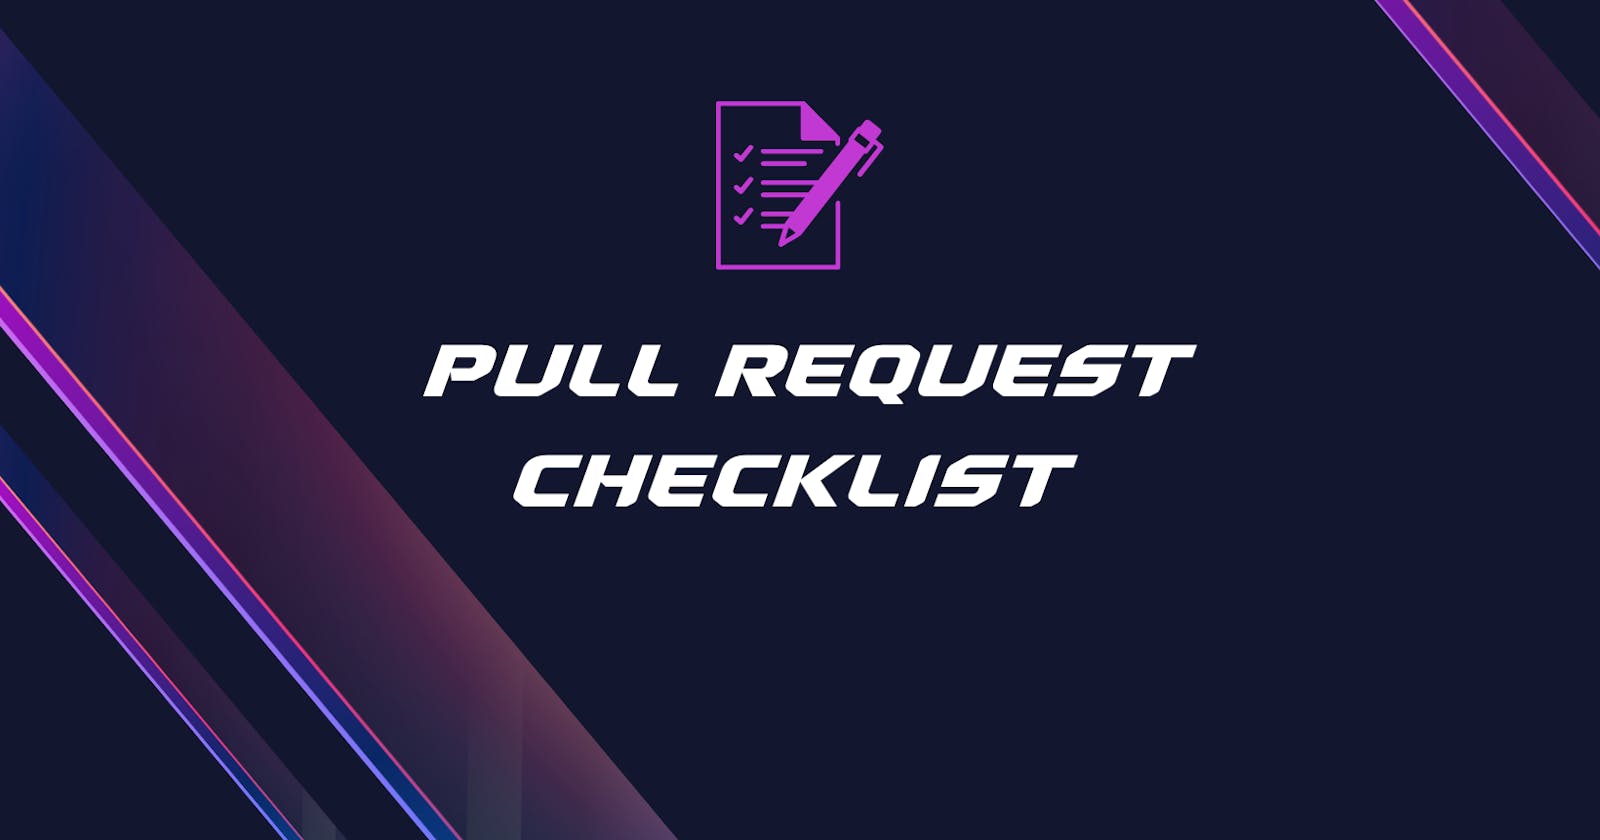 Pull Request Checklist